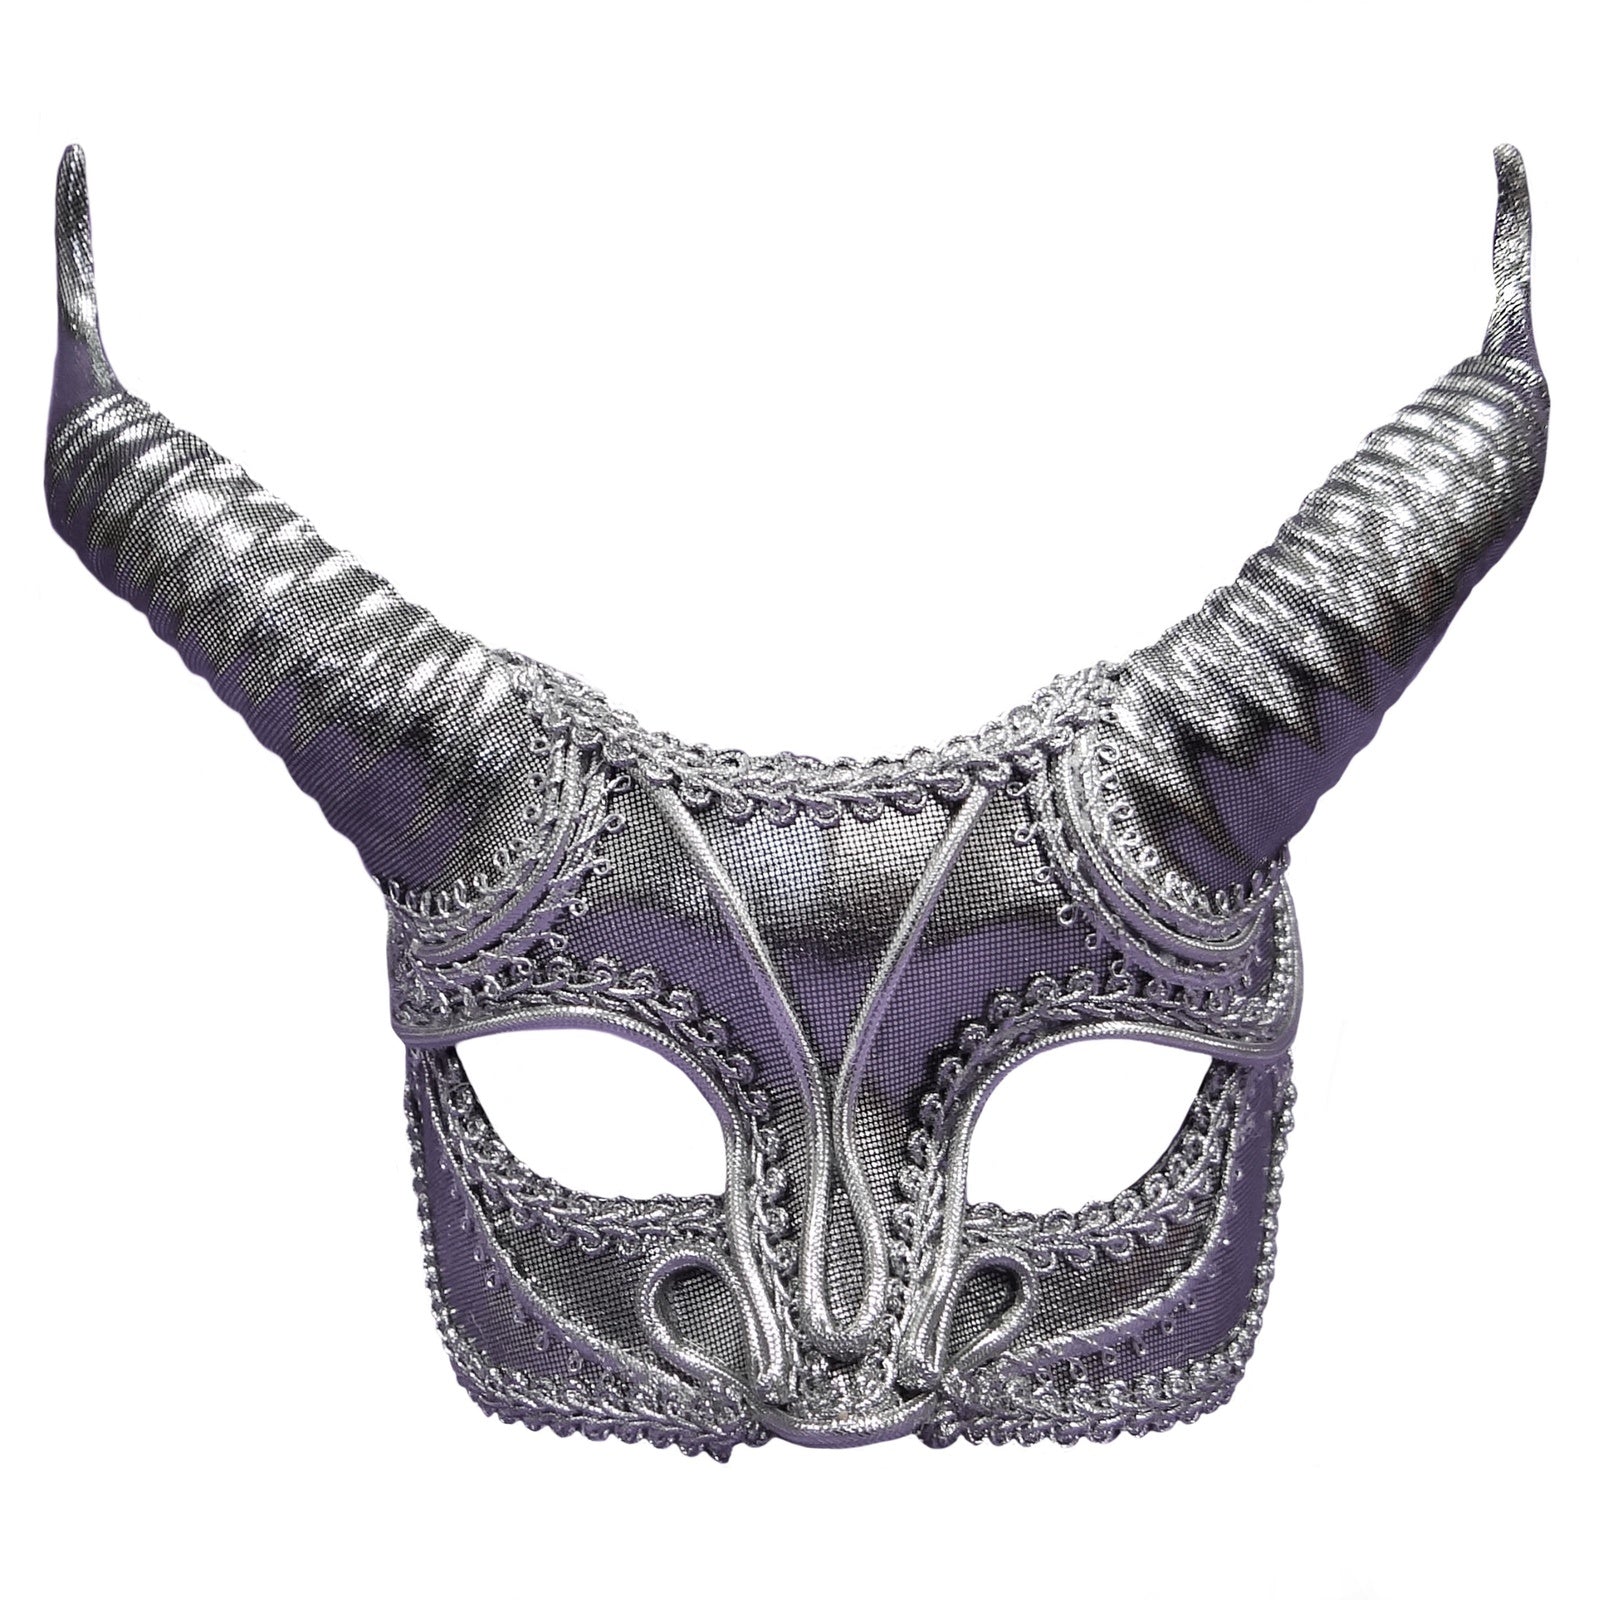 The Minotaur Masquerade Mask